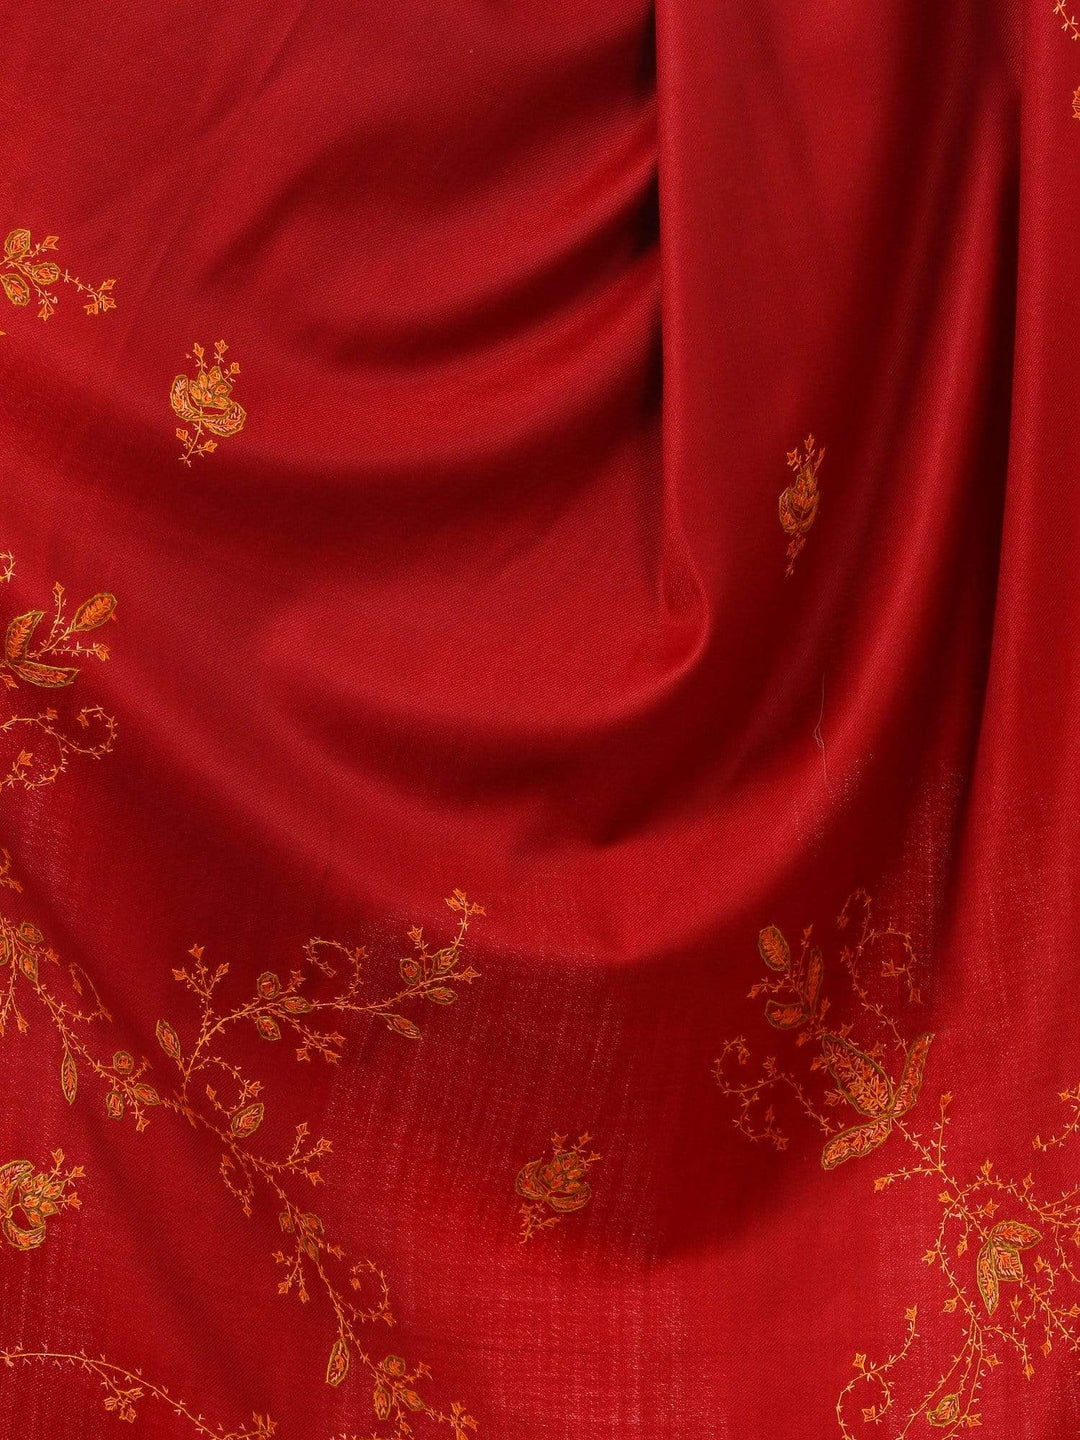 Pashtush Women'S Wool Shawl, Hand Embroidery, 100% Hand-Made (Maroon) Red